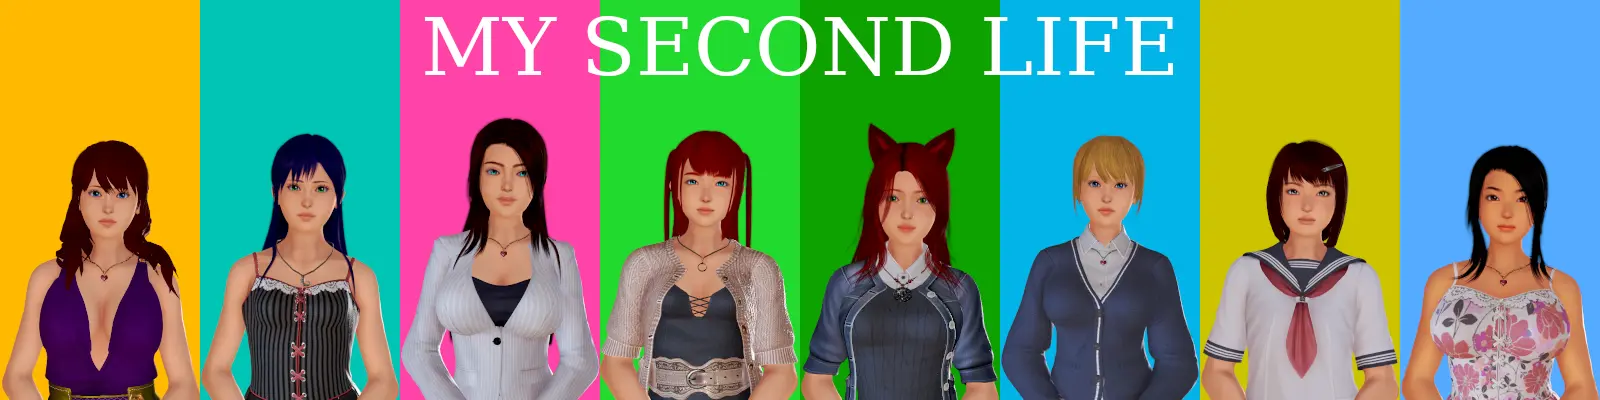 My Second Life [v0.1 - Beta 1] main image